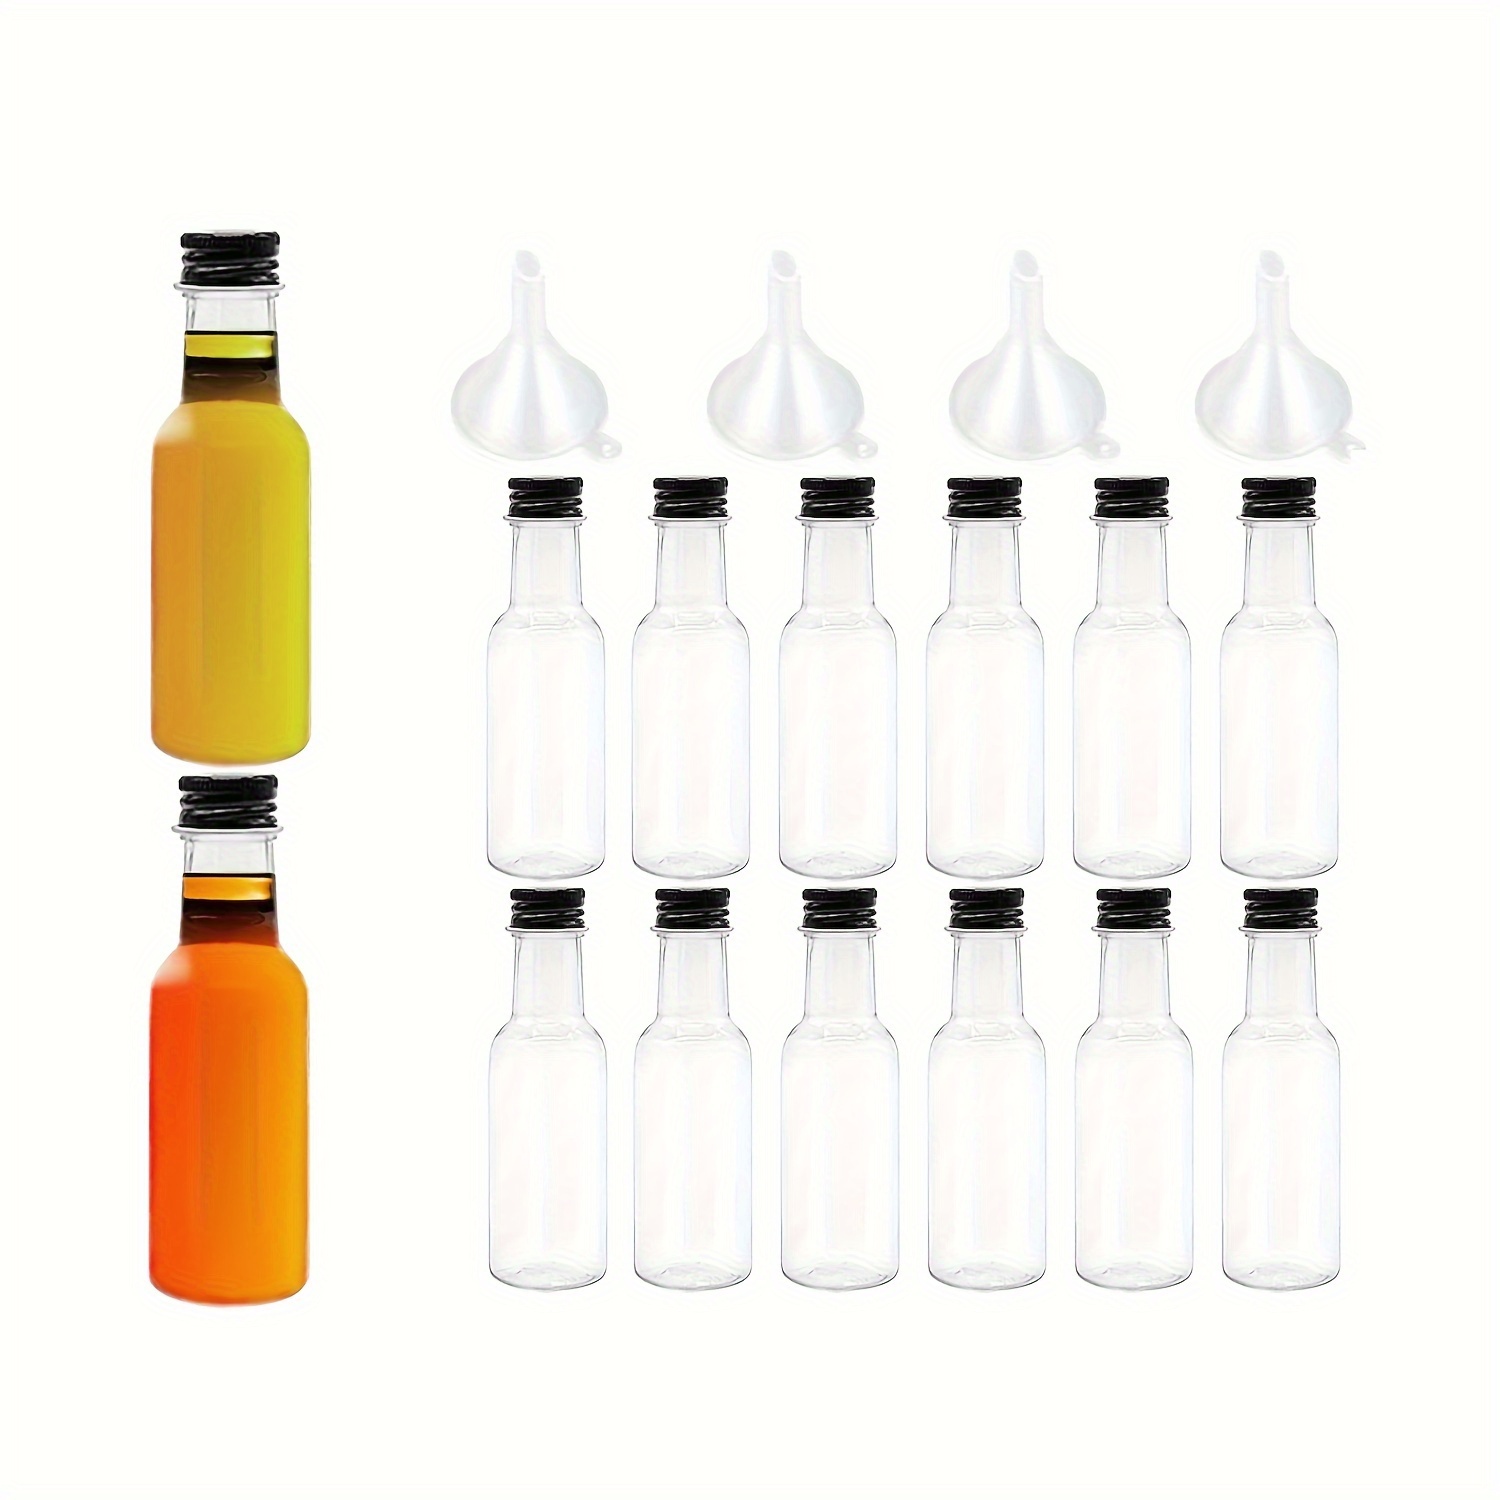 24 Mini Liquor Bottles, 50ml, Small Empty Plastic Mini Alcohol